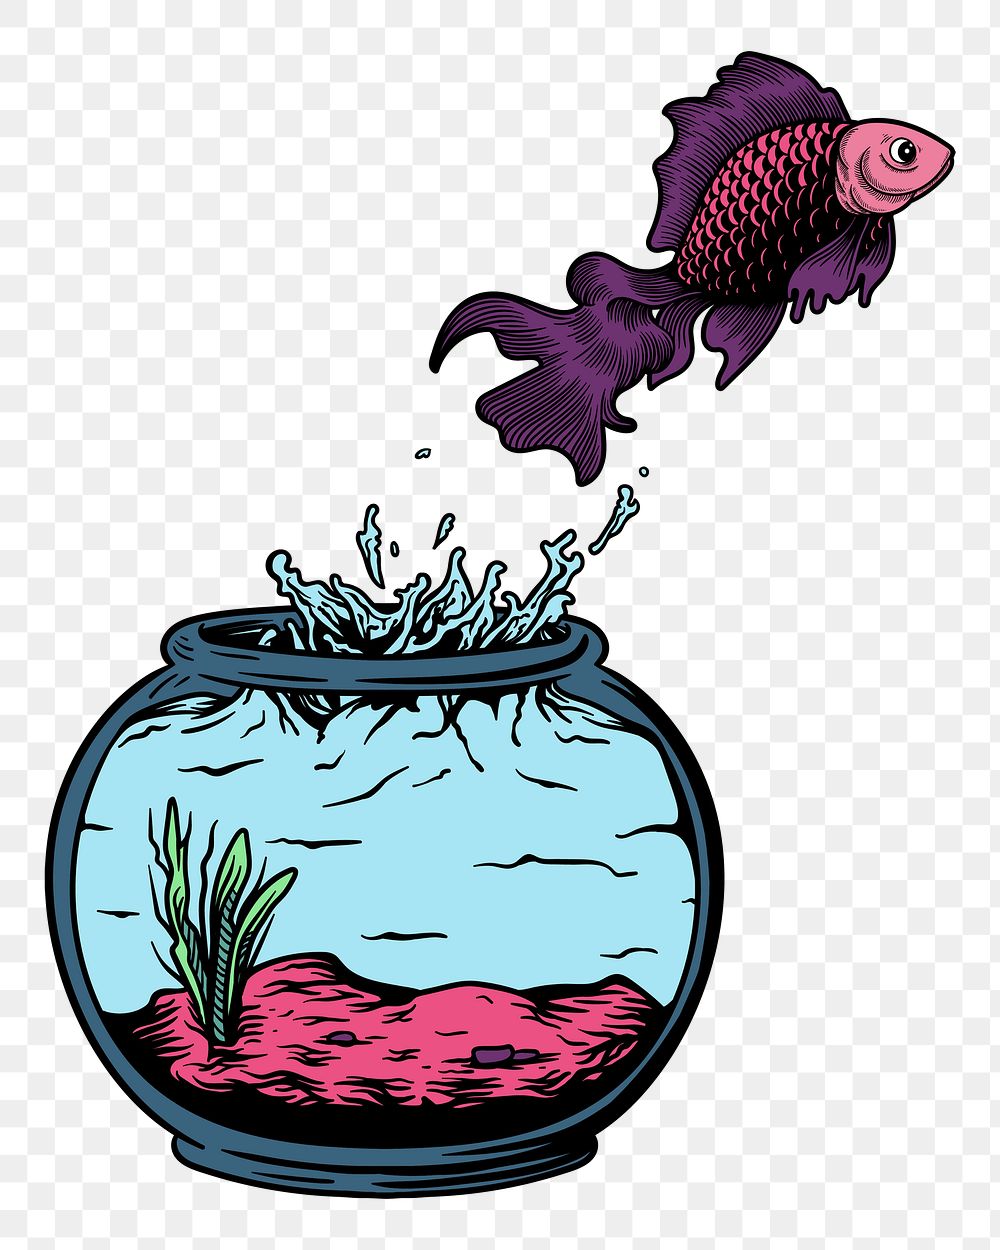 Png fish tank element, transparent background